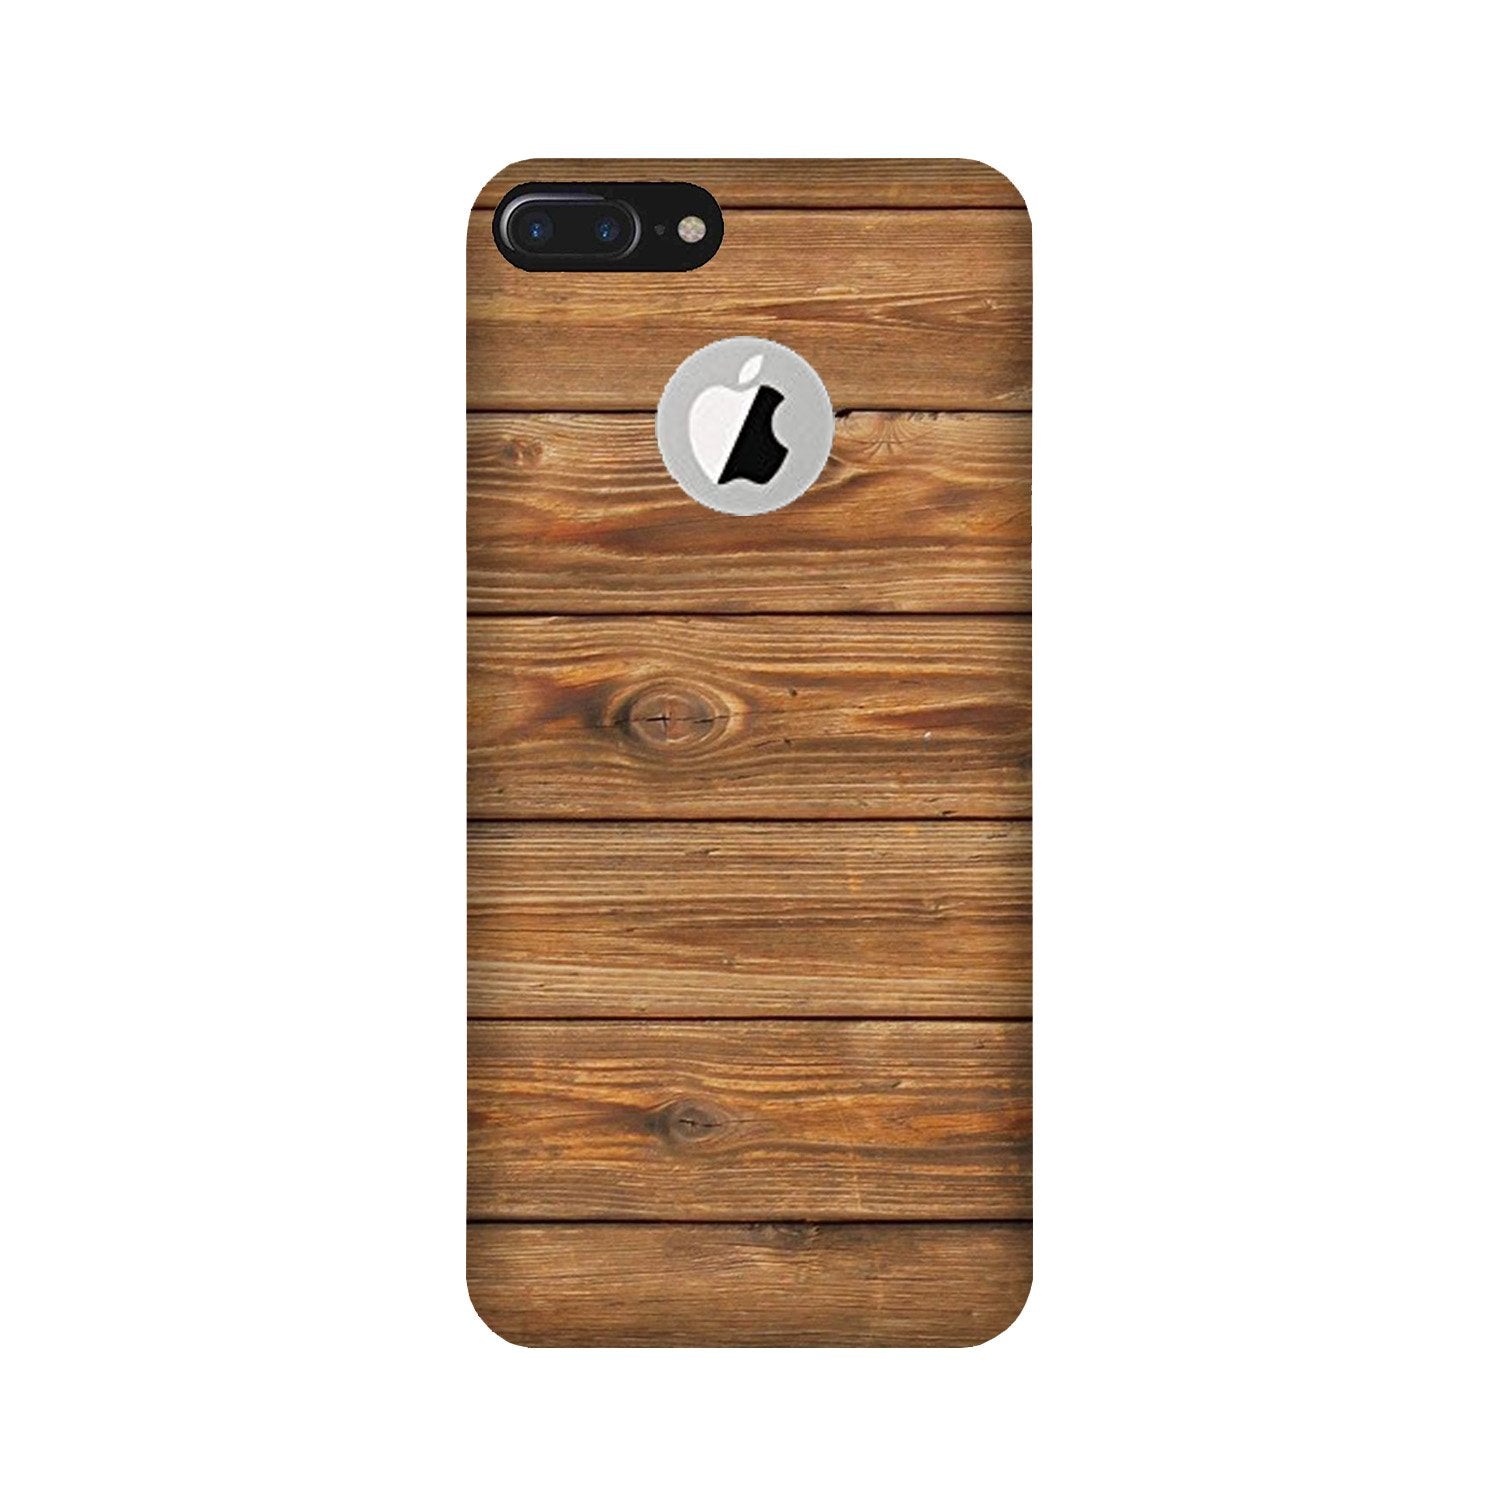 Wooden Look Case for iPhone 7 Plus logo cut(Design - 113)